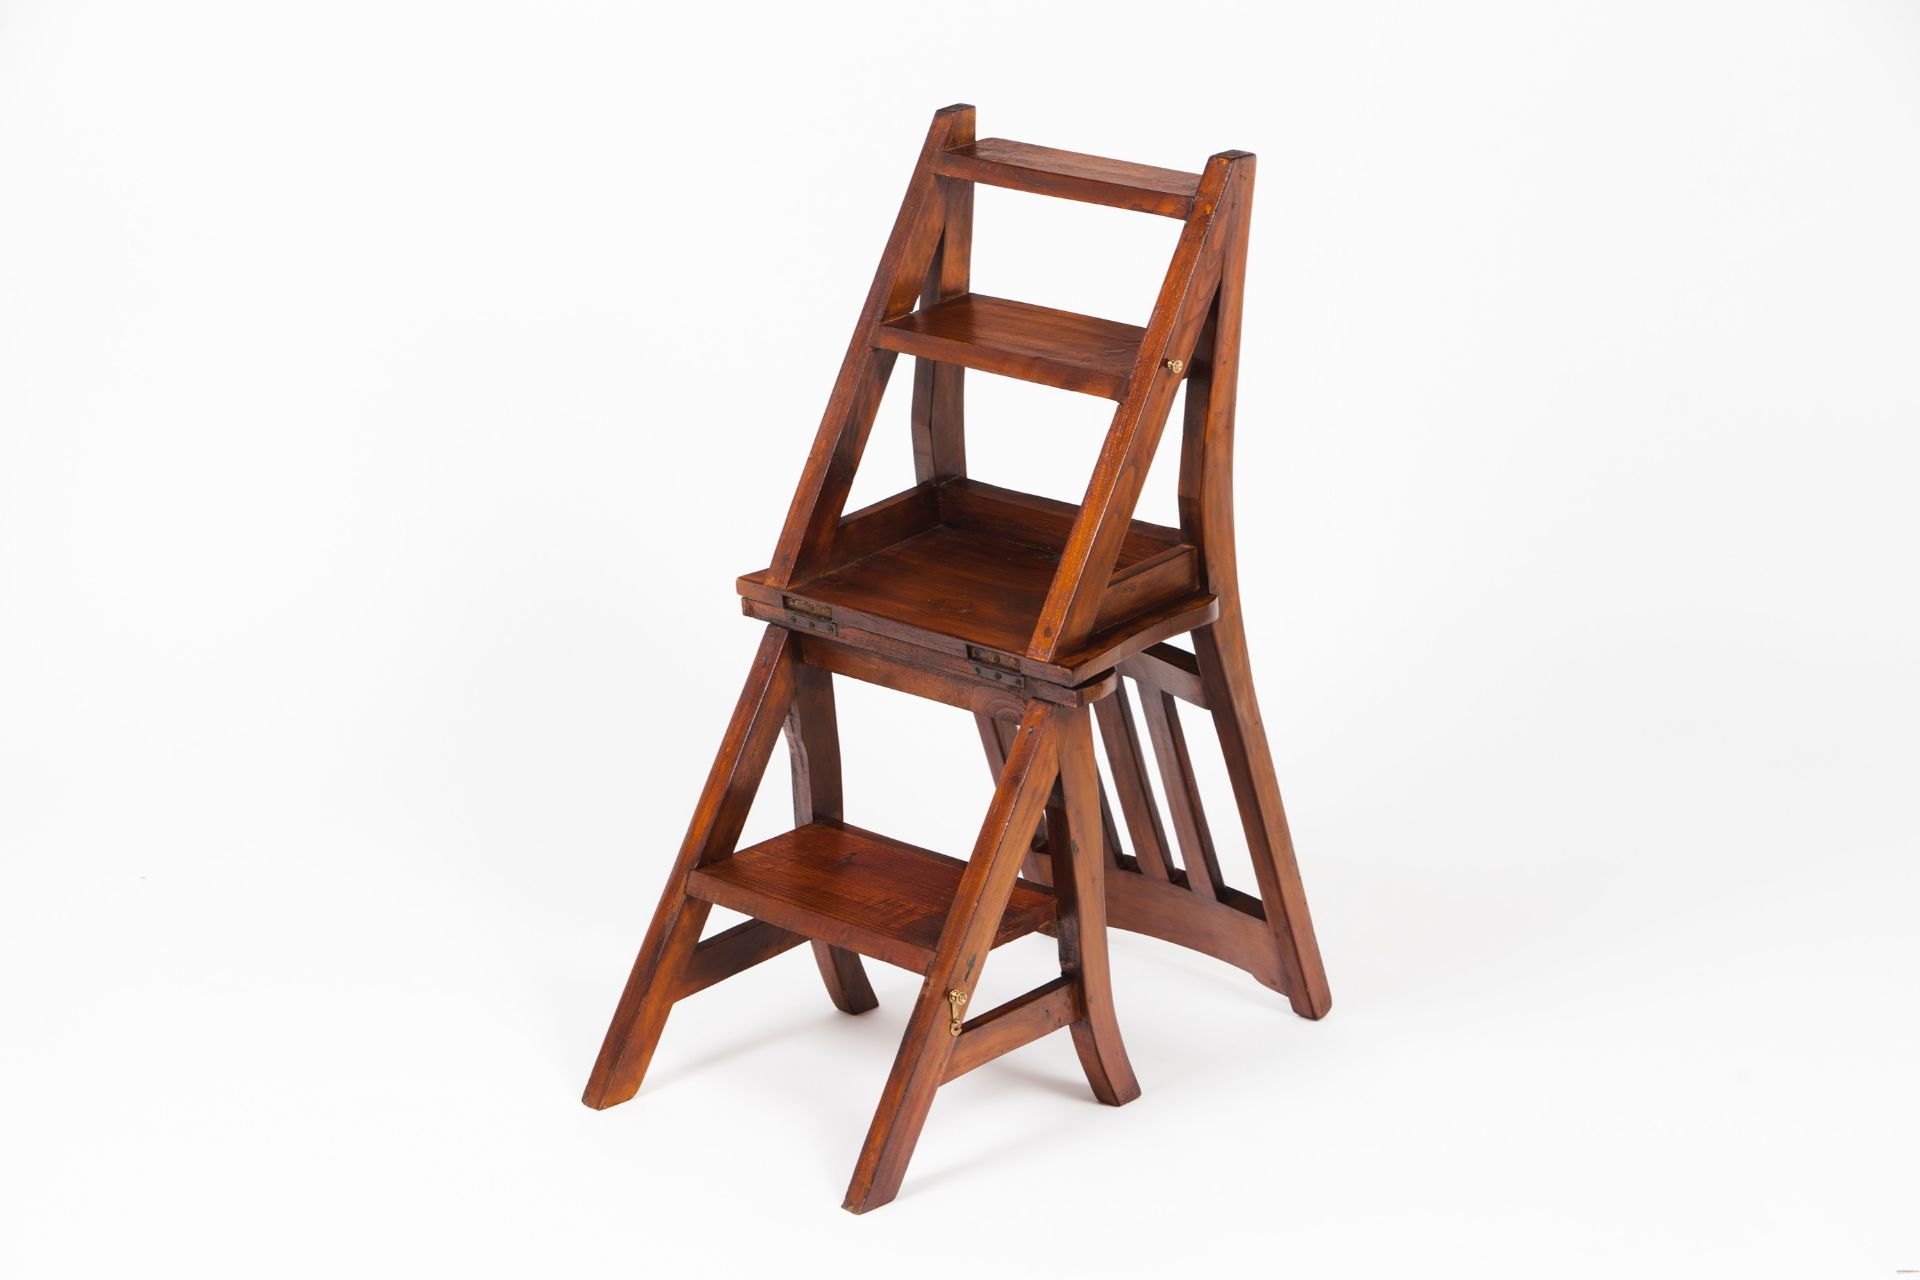 A metamorphic library chair / step ladder